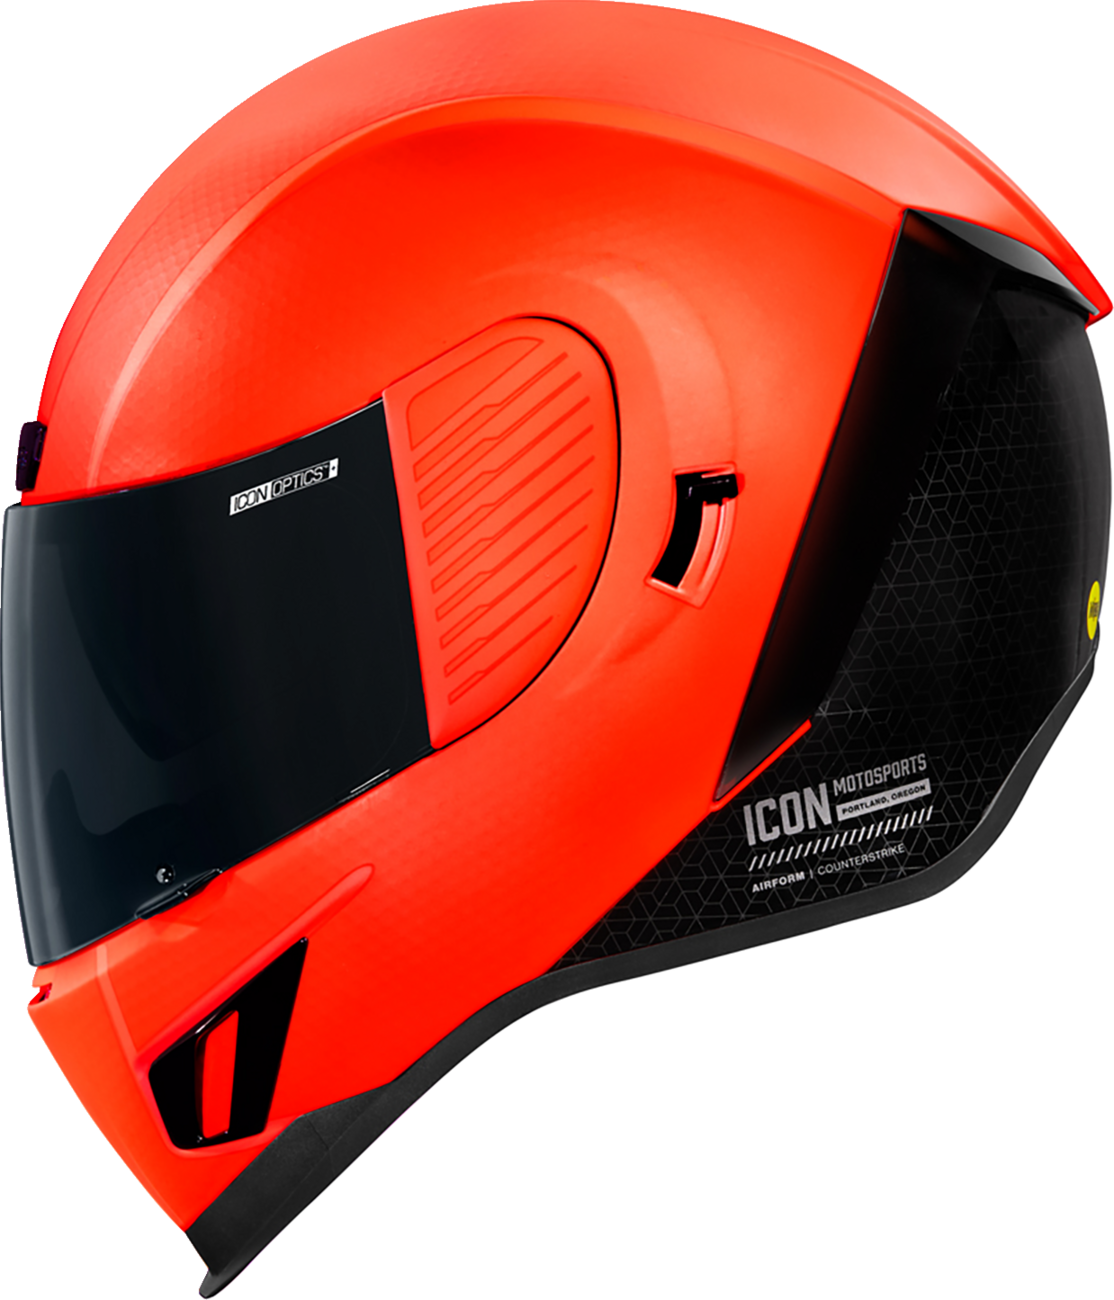 ICON Airform™ Helmet - MIPS® - Counterstrike - Red - Medium 0101-15087